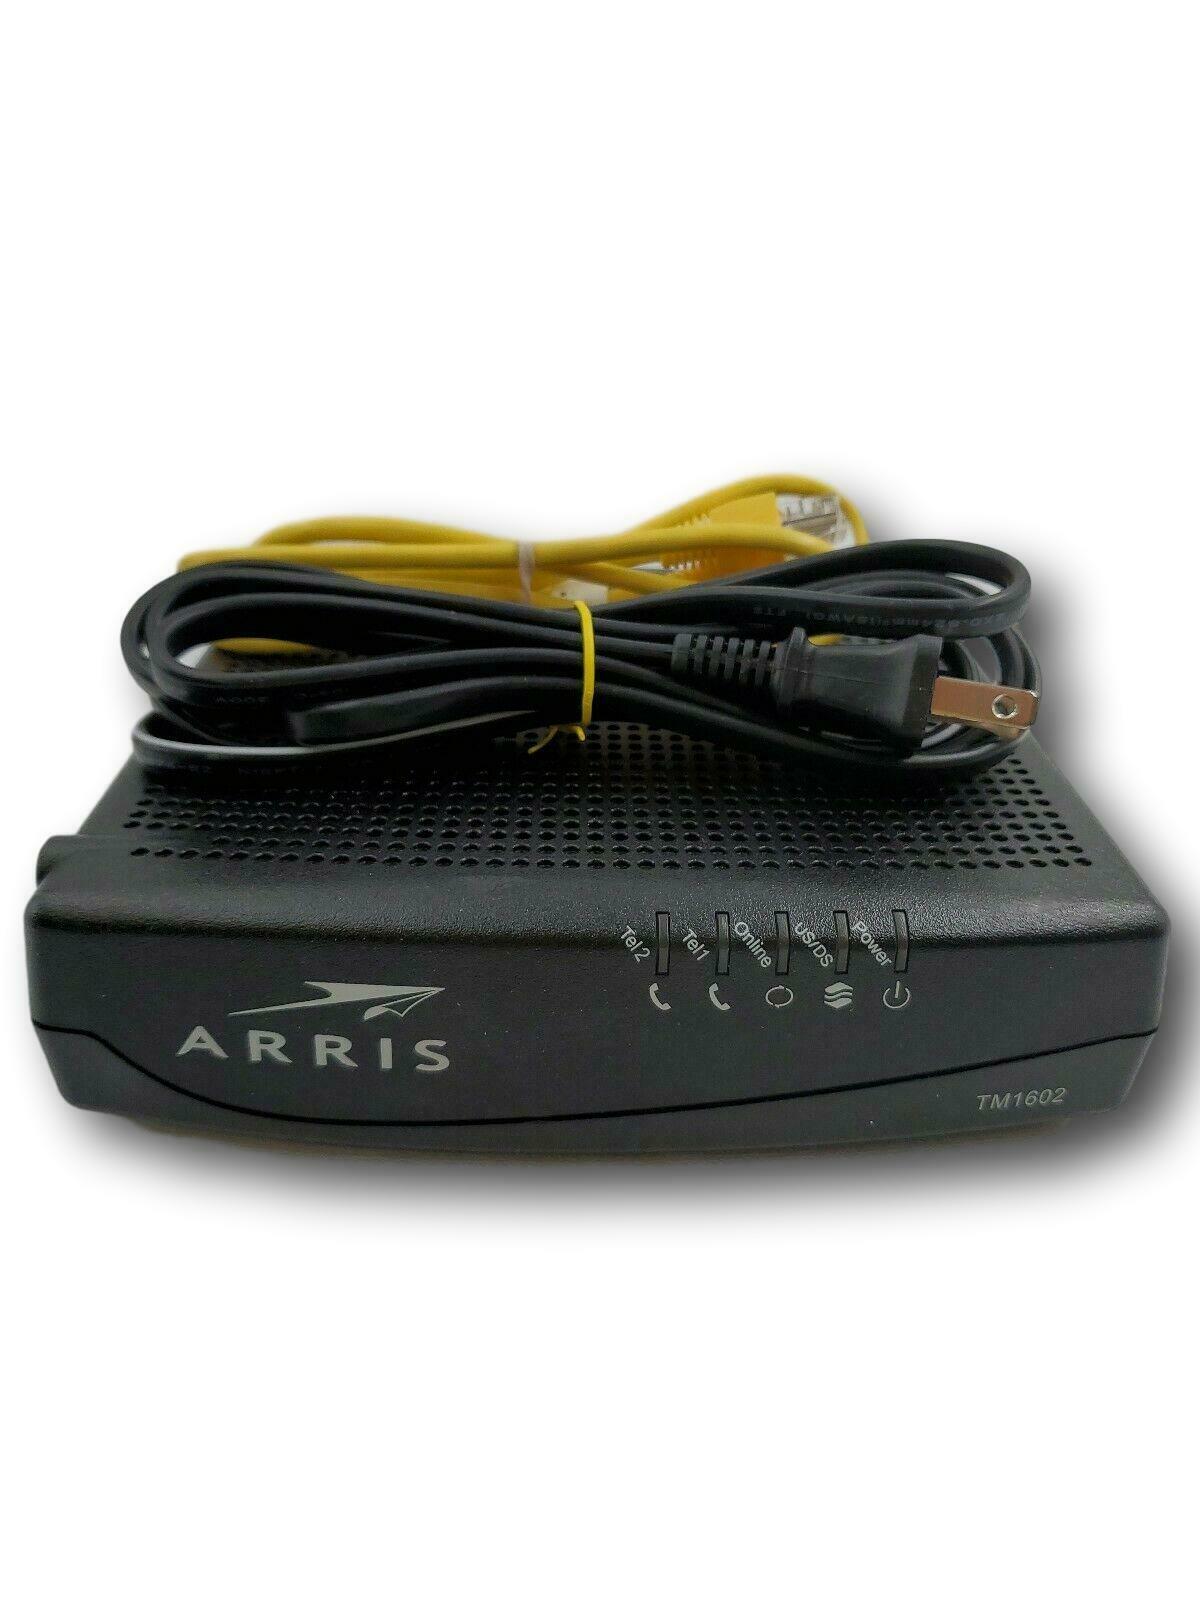 Arris Touchstone Tm1602a Docsis 3.0 Cable Telephony Modem, Optimum Cablevision